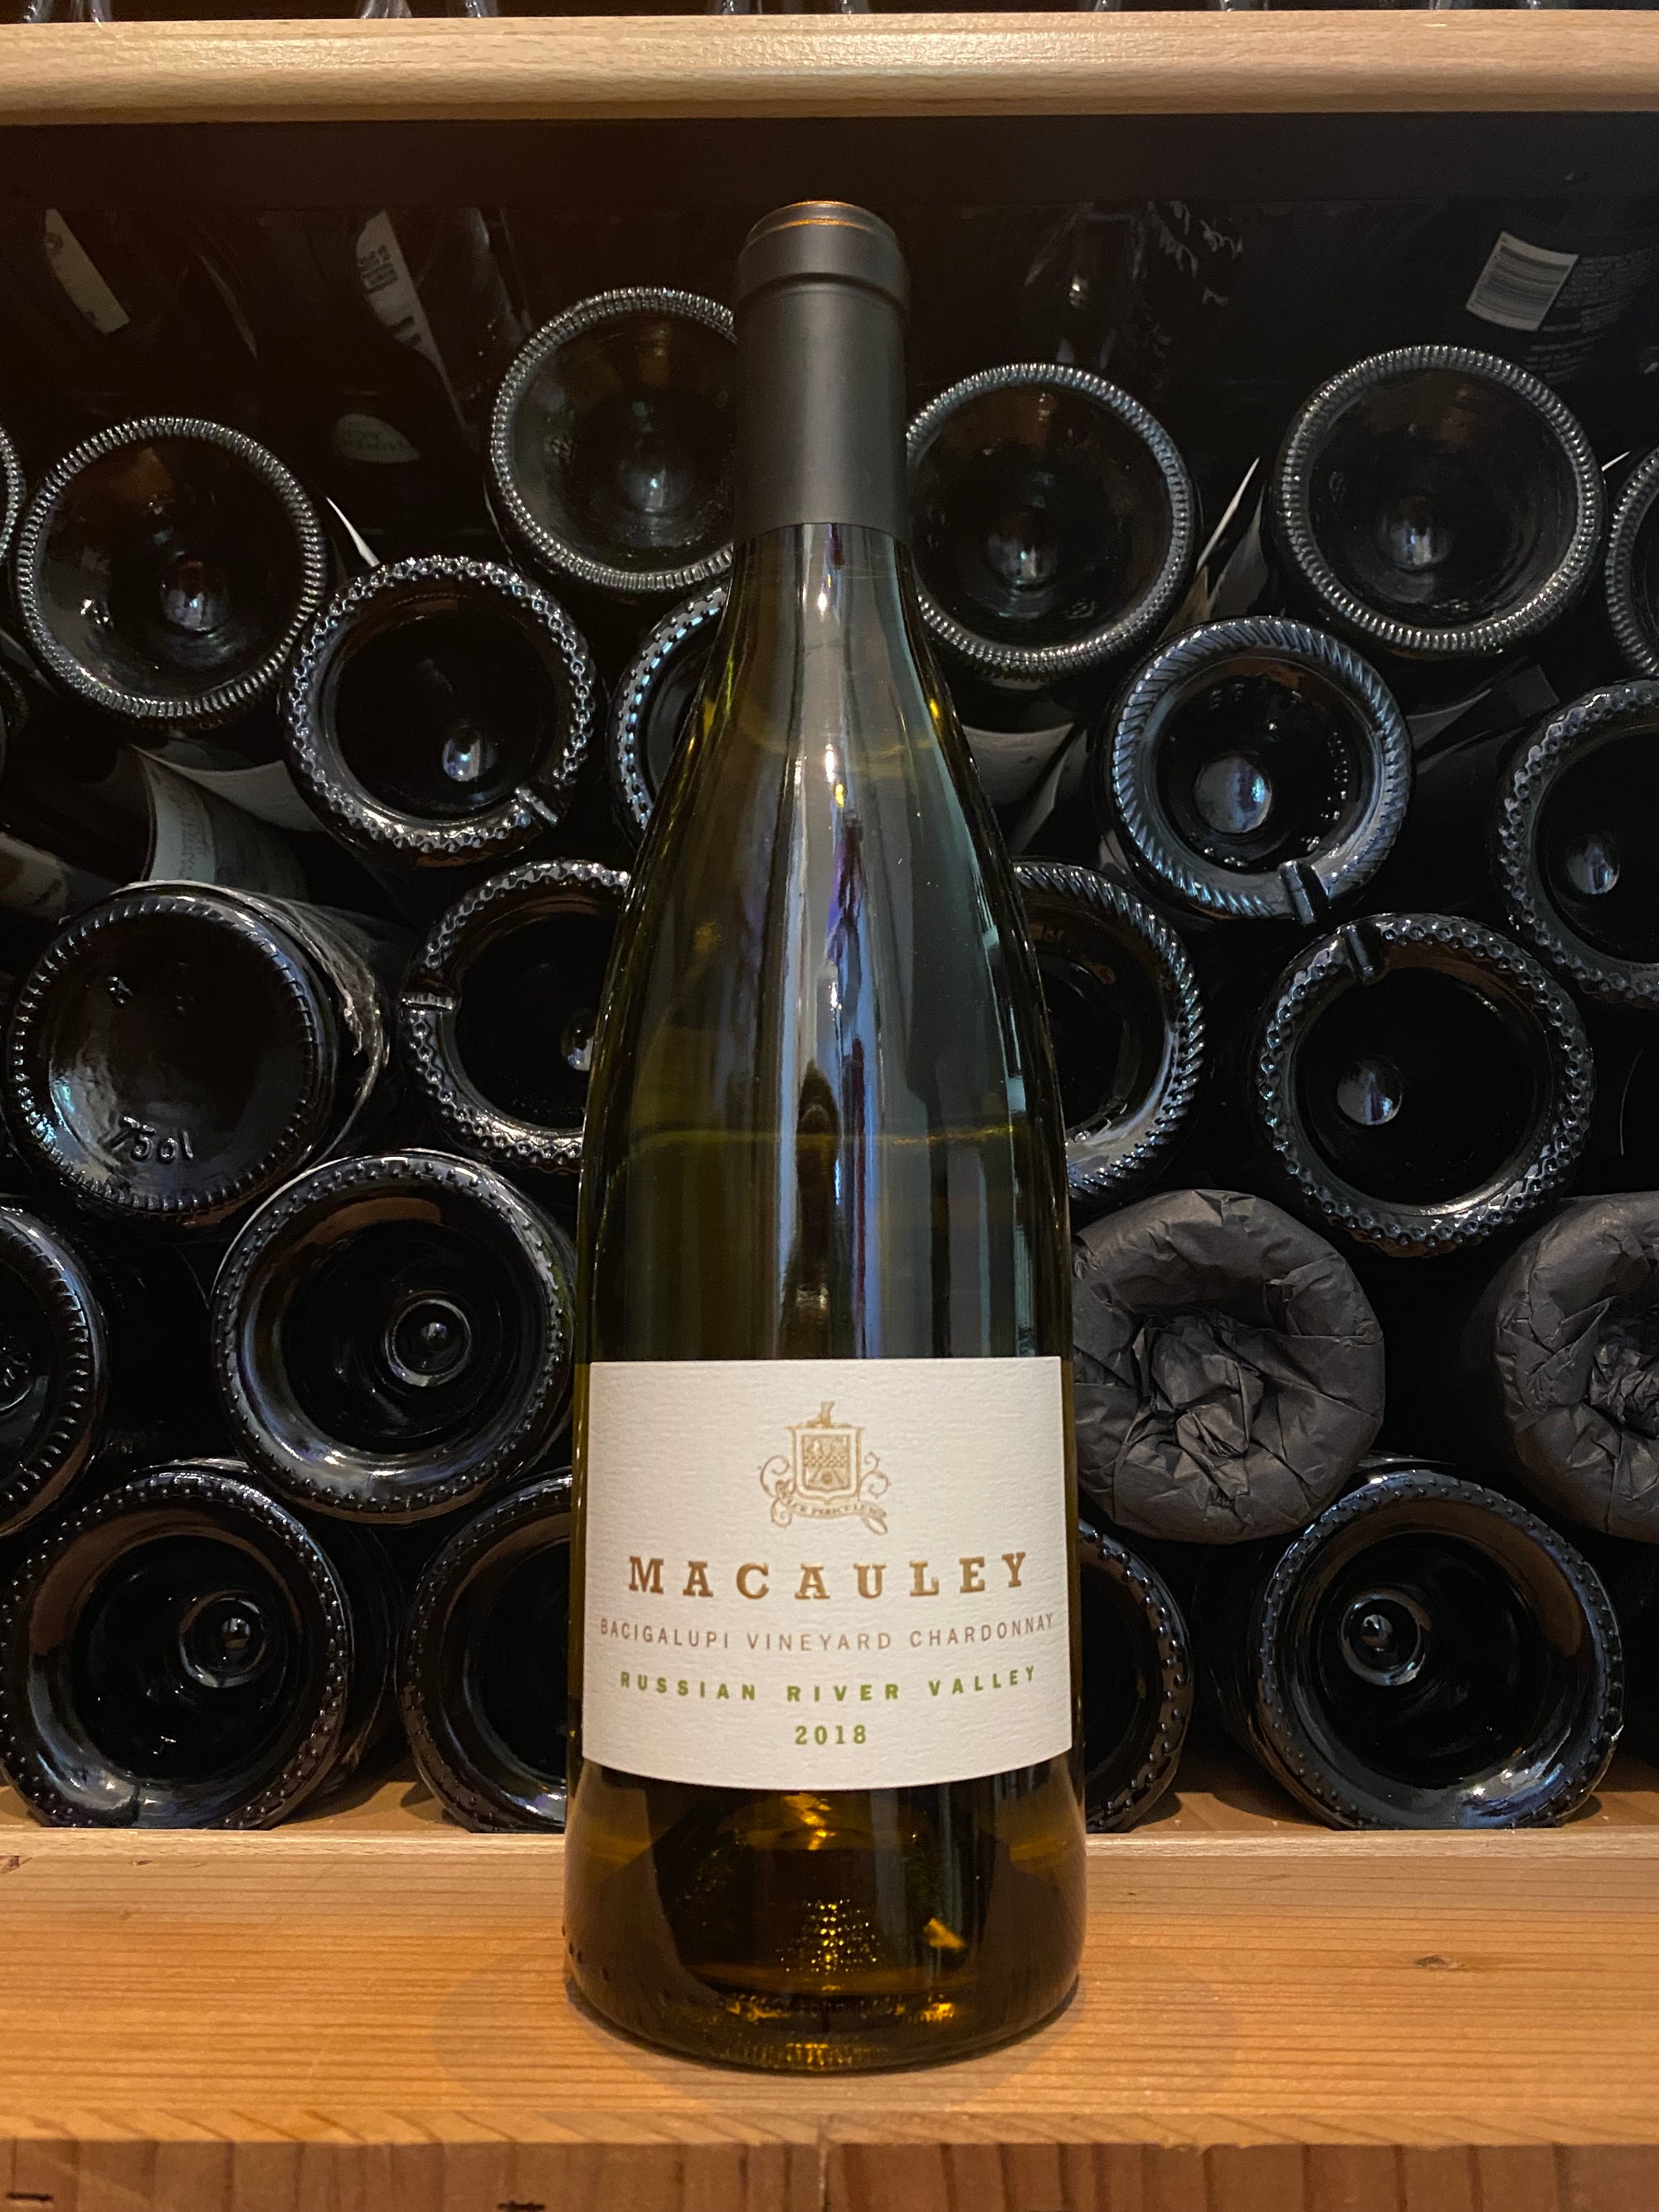 Macauley Chardonnay Bacigalupi Vineyard Russian River Valley 2018